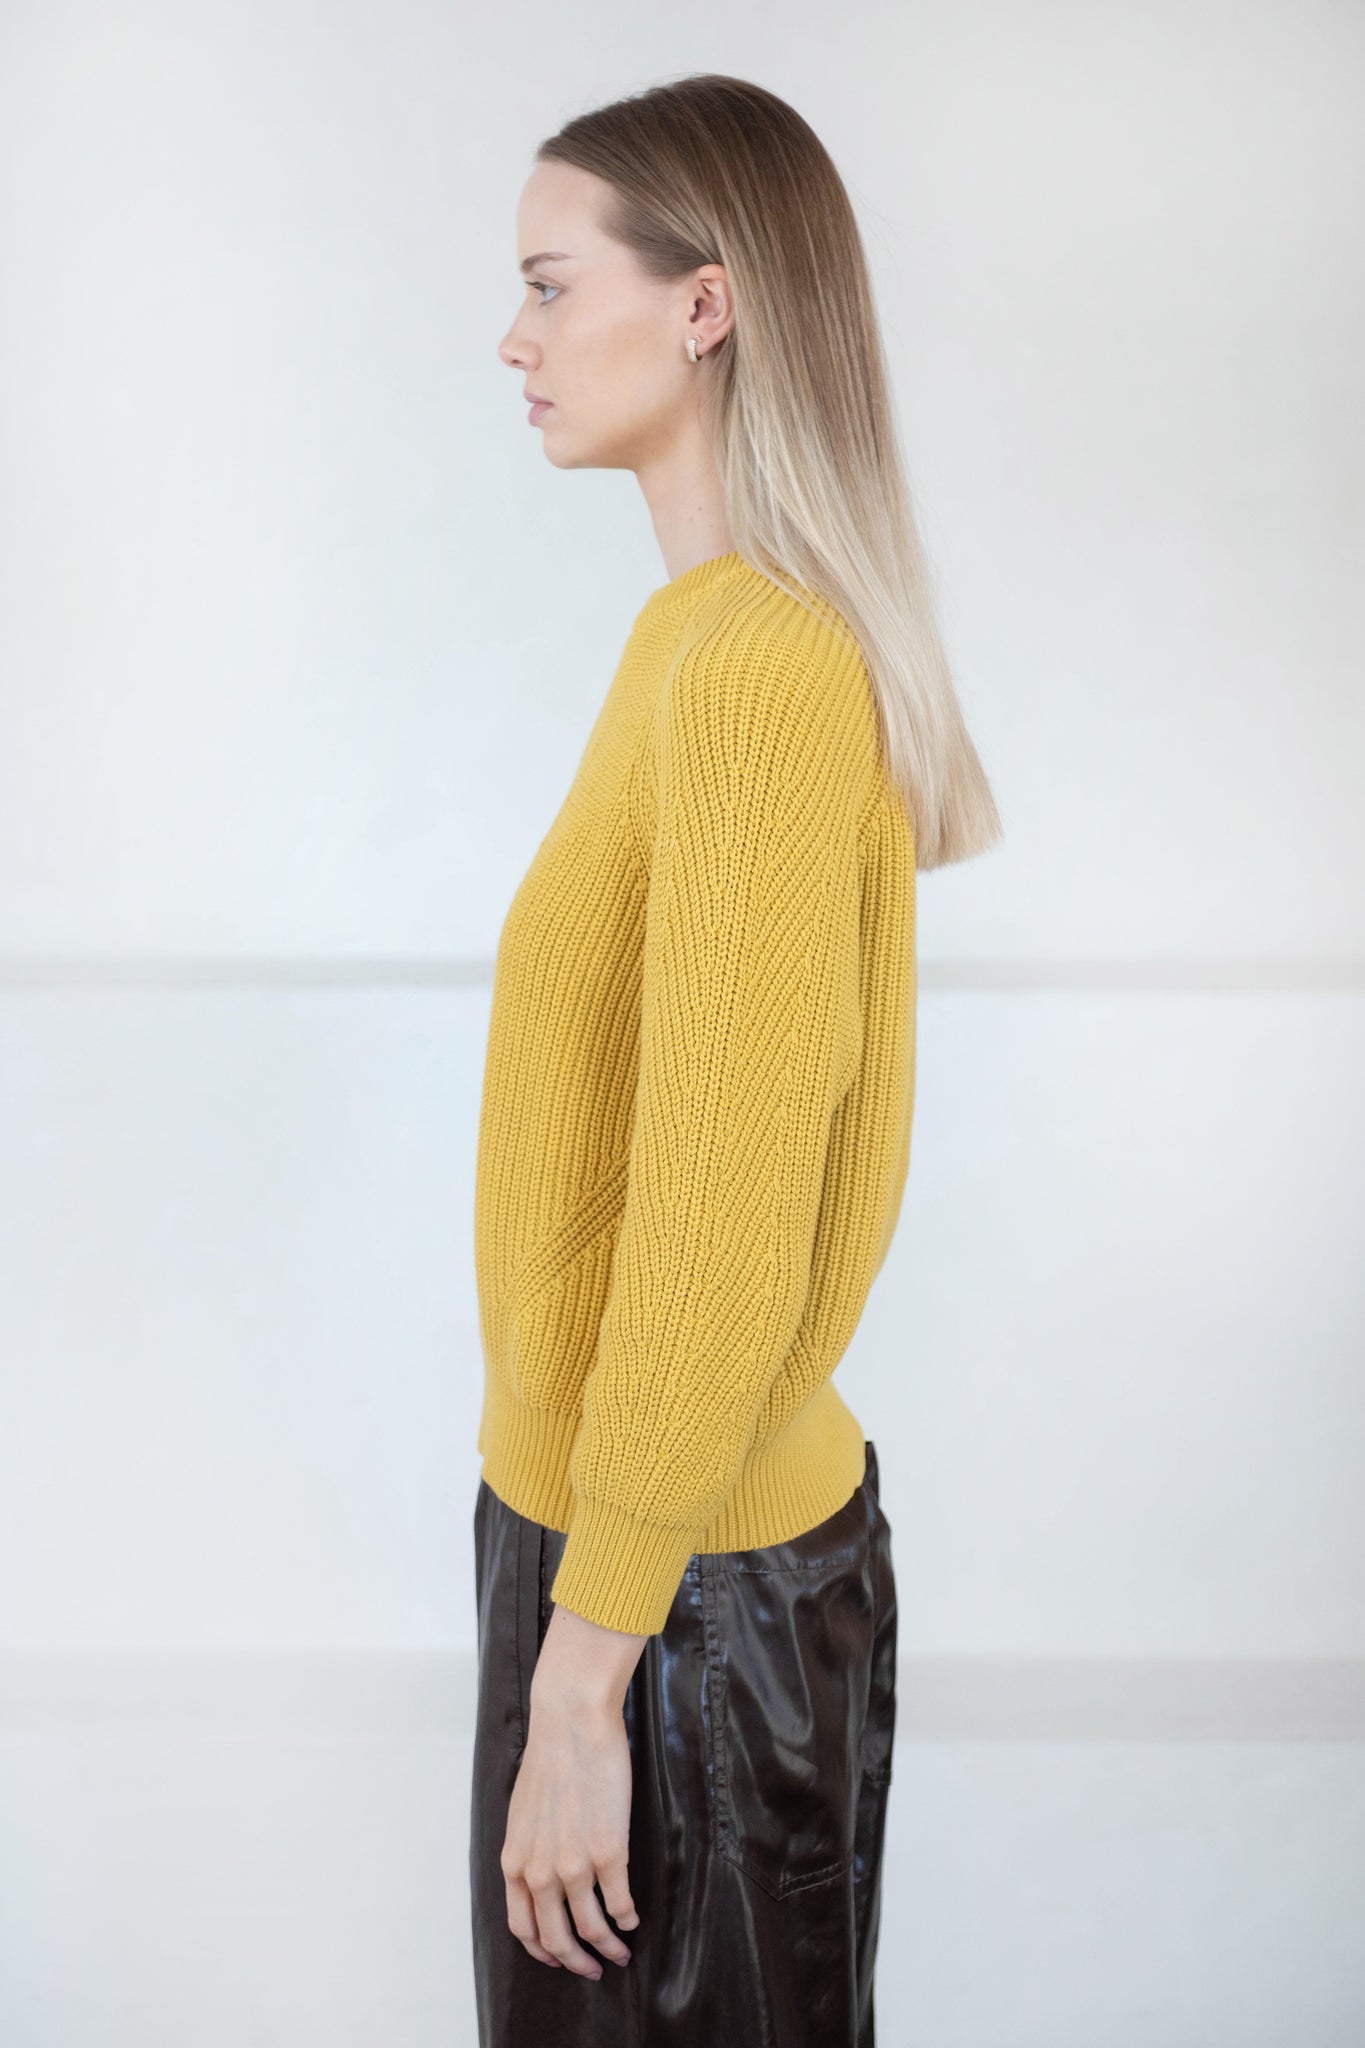 Demylee - Chelsea Organic Cotton Sweater, Yellow